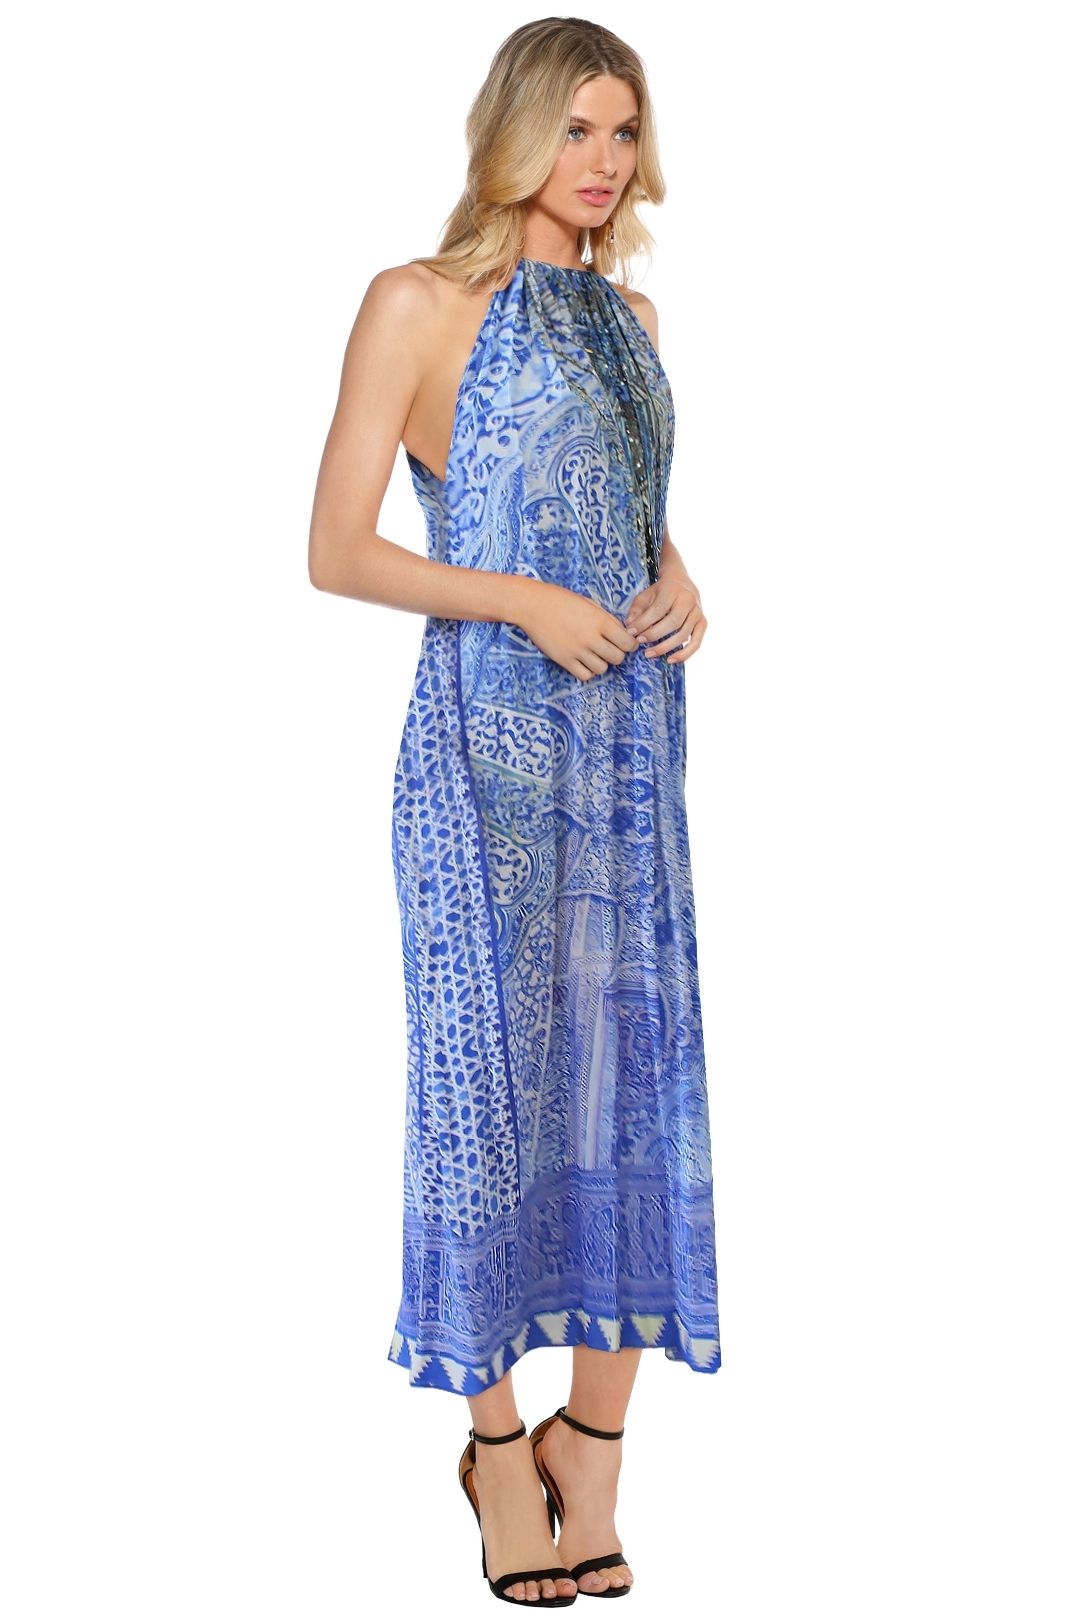 Camilla - Bosphorous Drawstring Dress - Prints - Side